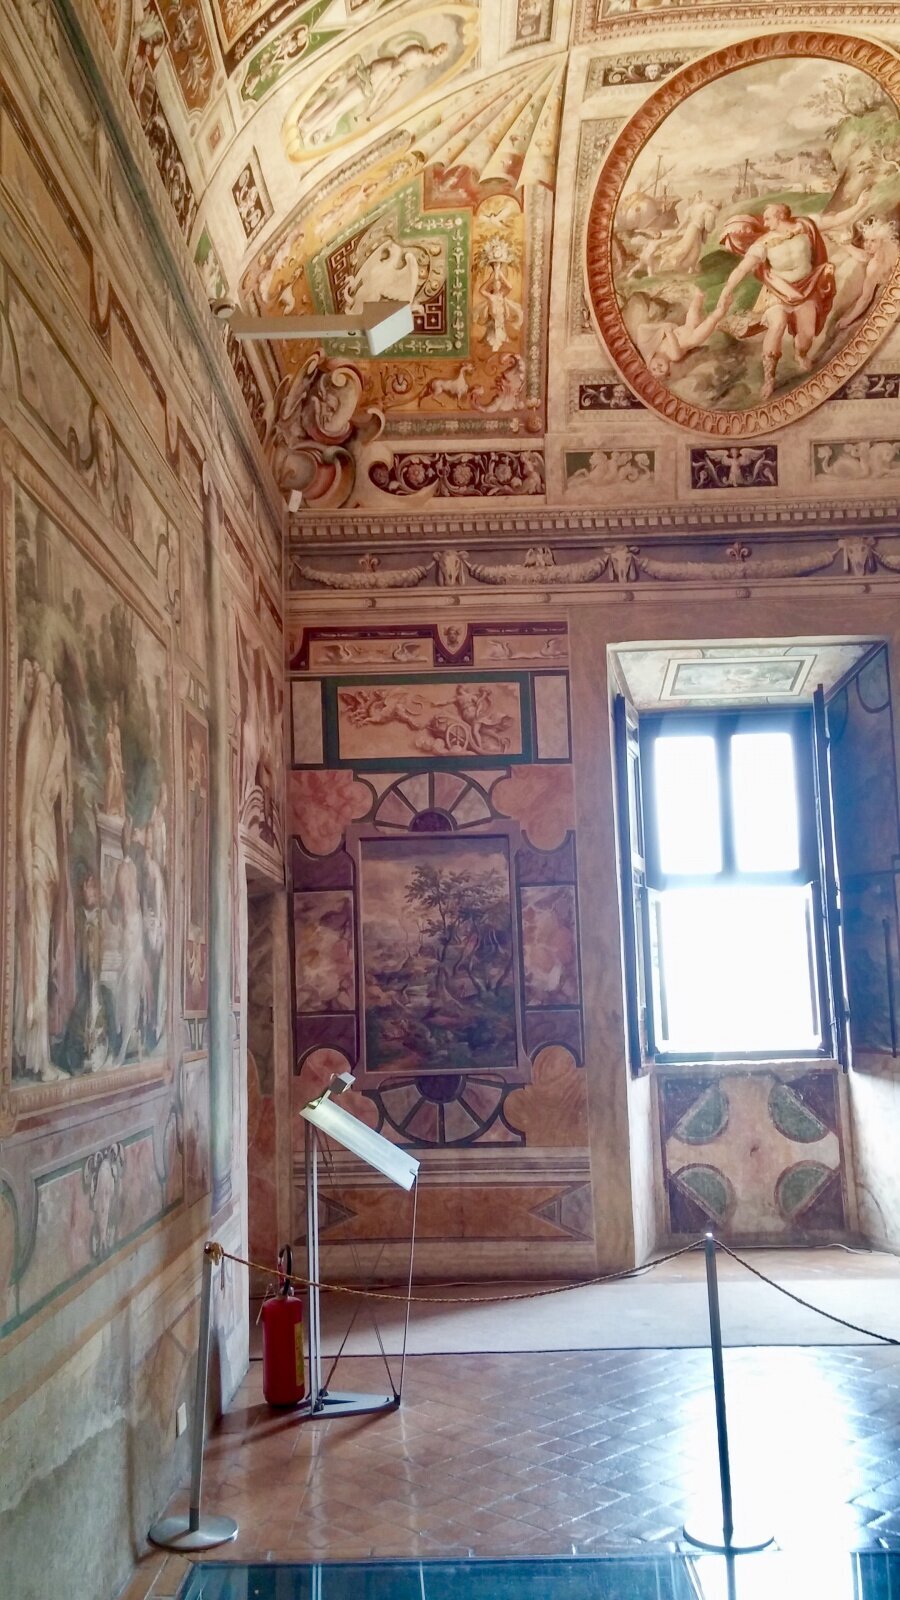 Murals in the interior